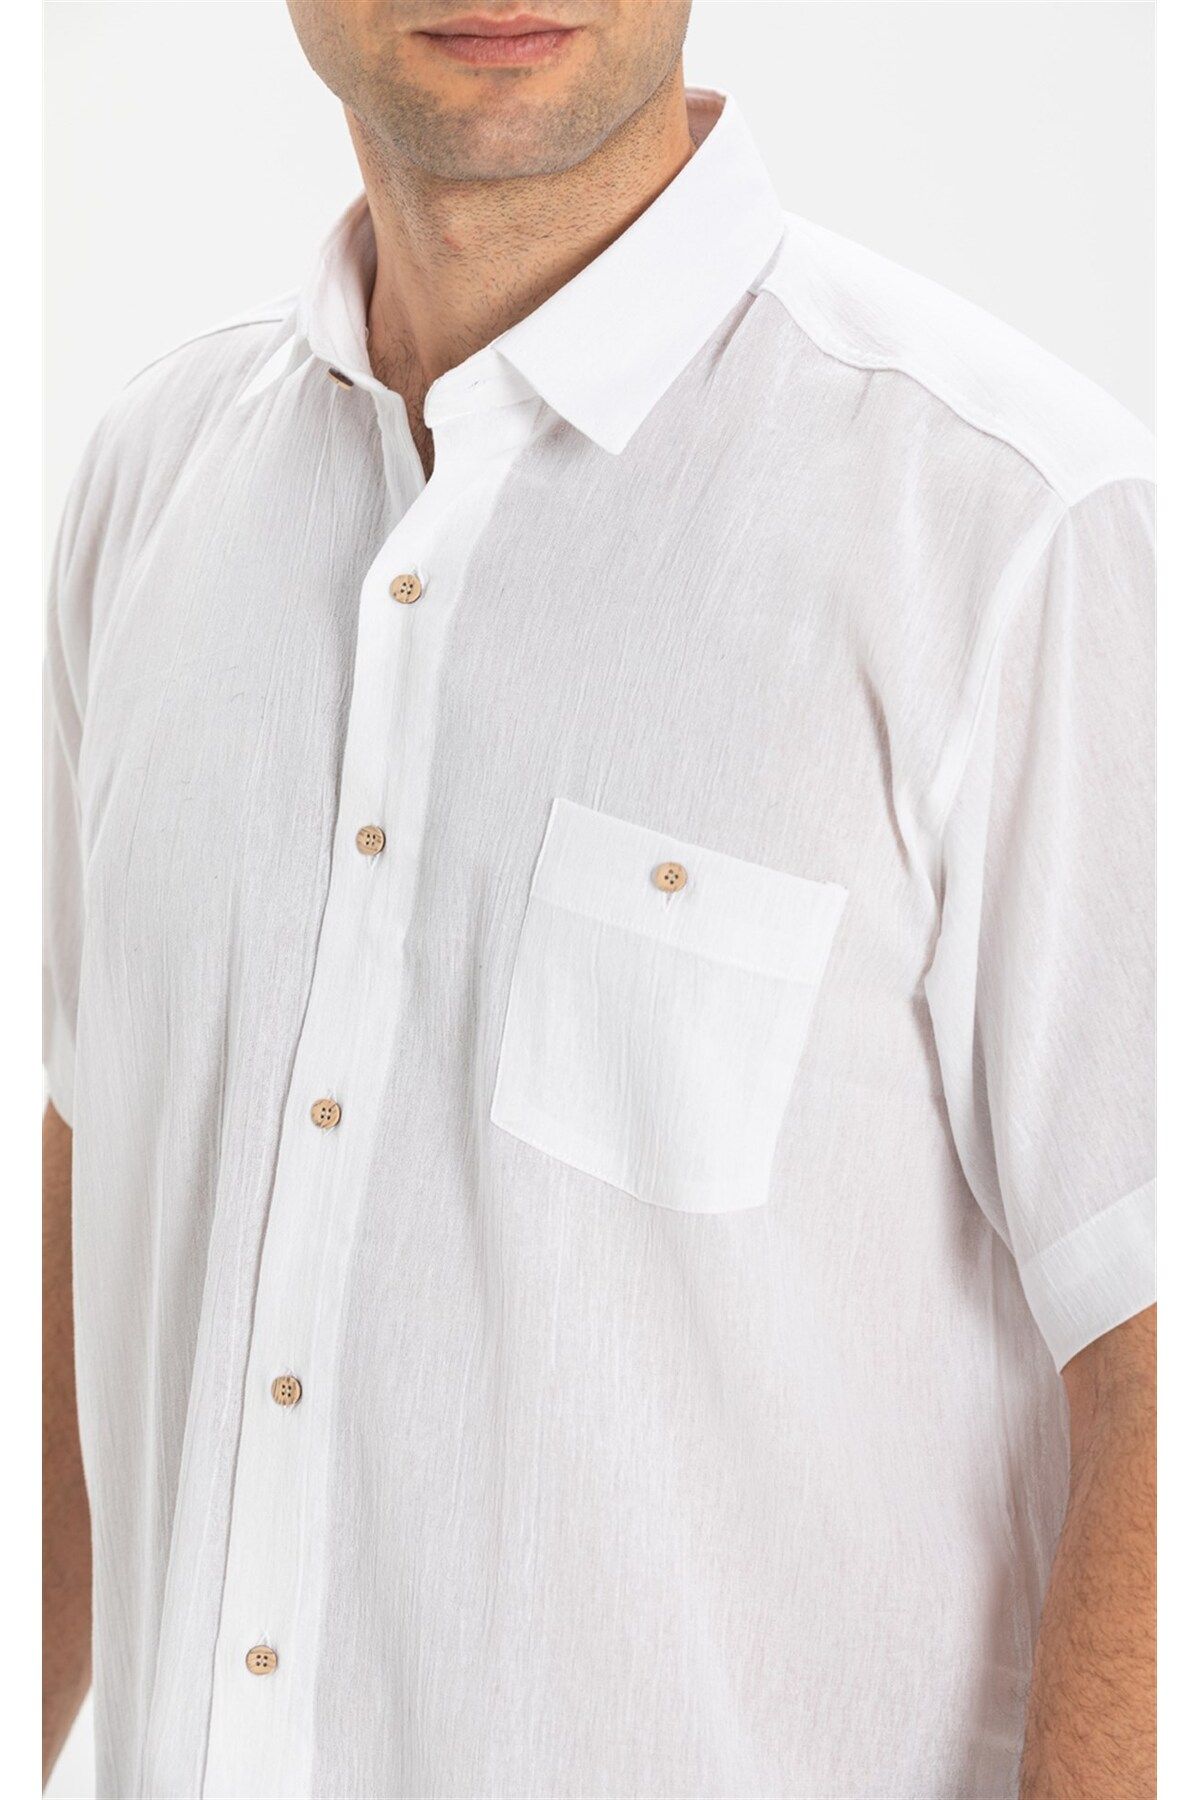 Eliş Şile Bezi پیراهن آستین کوتاه شیله پارچه ای تک جیبی مردانه سایز بزرگ 3001